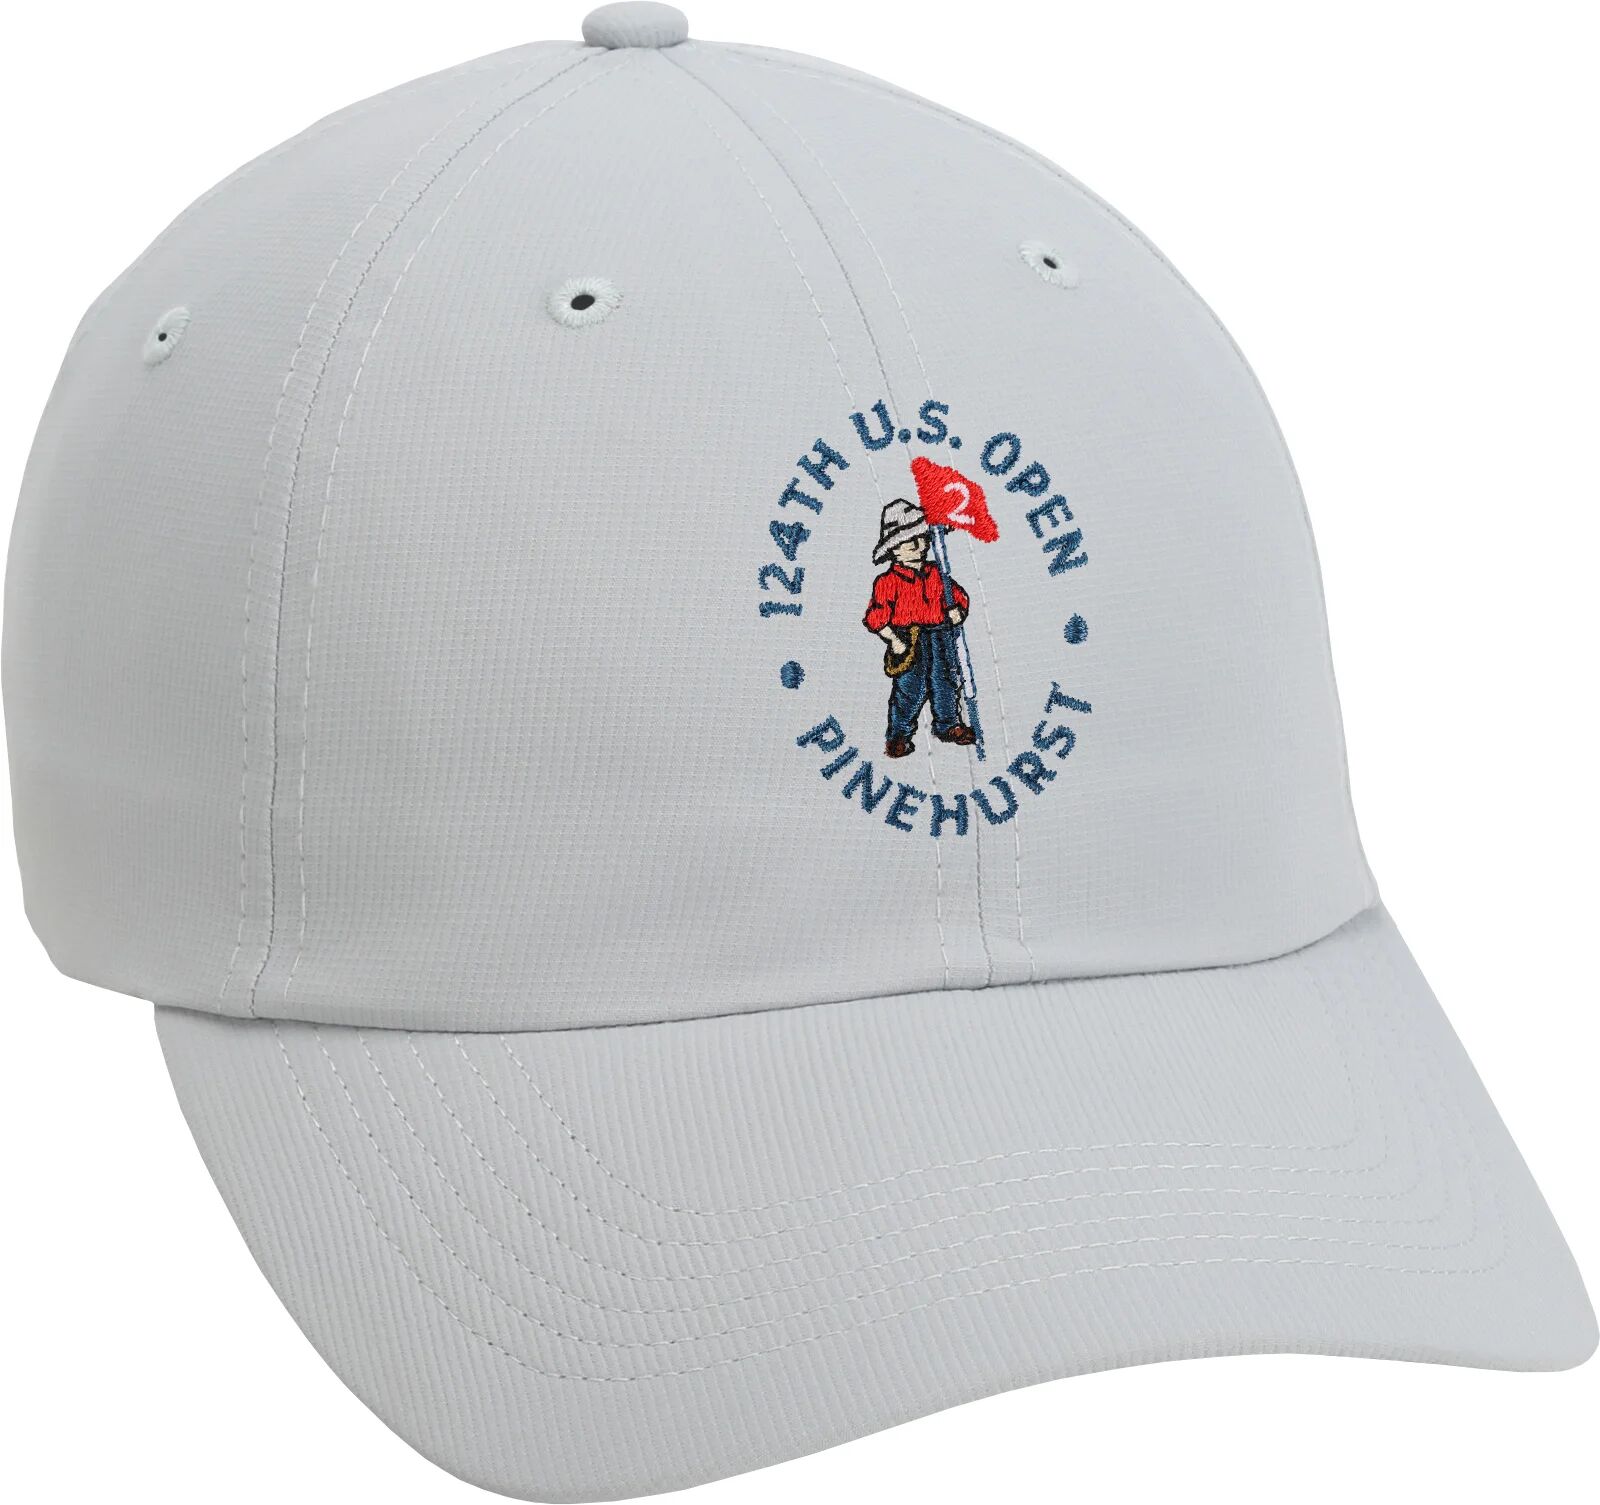 Imperial Headwear Imperial 2024 U.S. Open Original Performance Men's Golf Hat - Grey